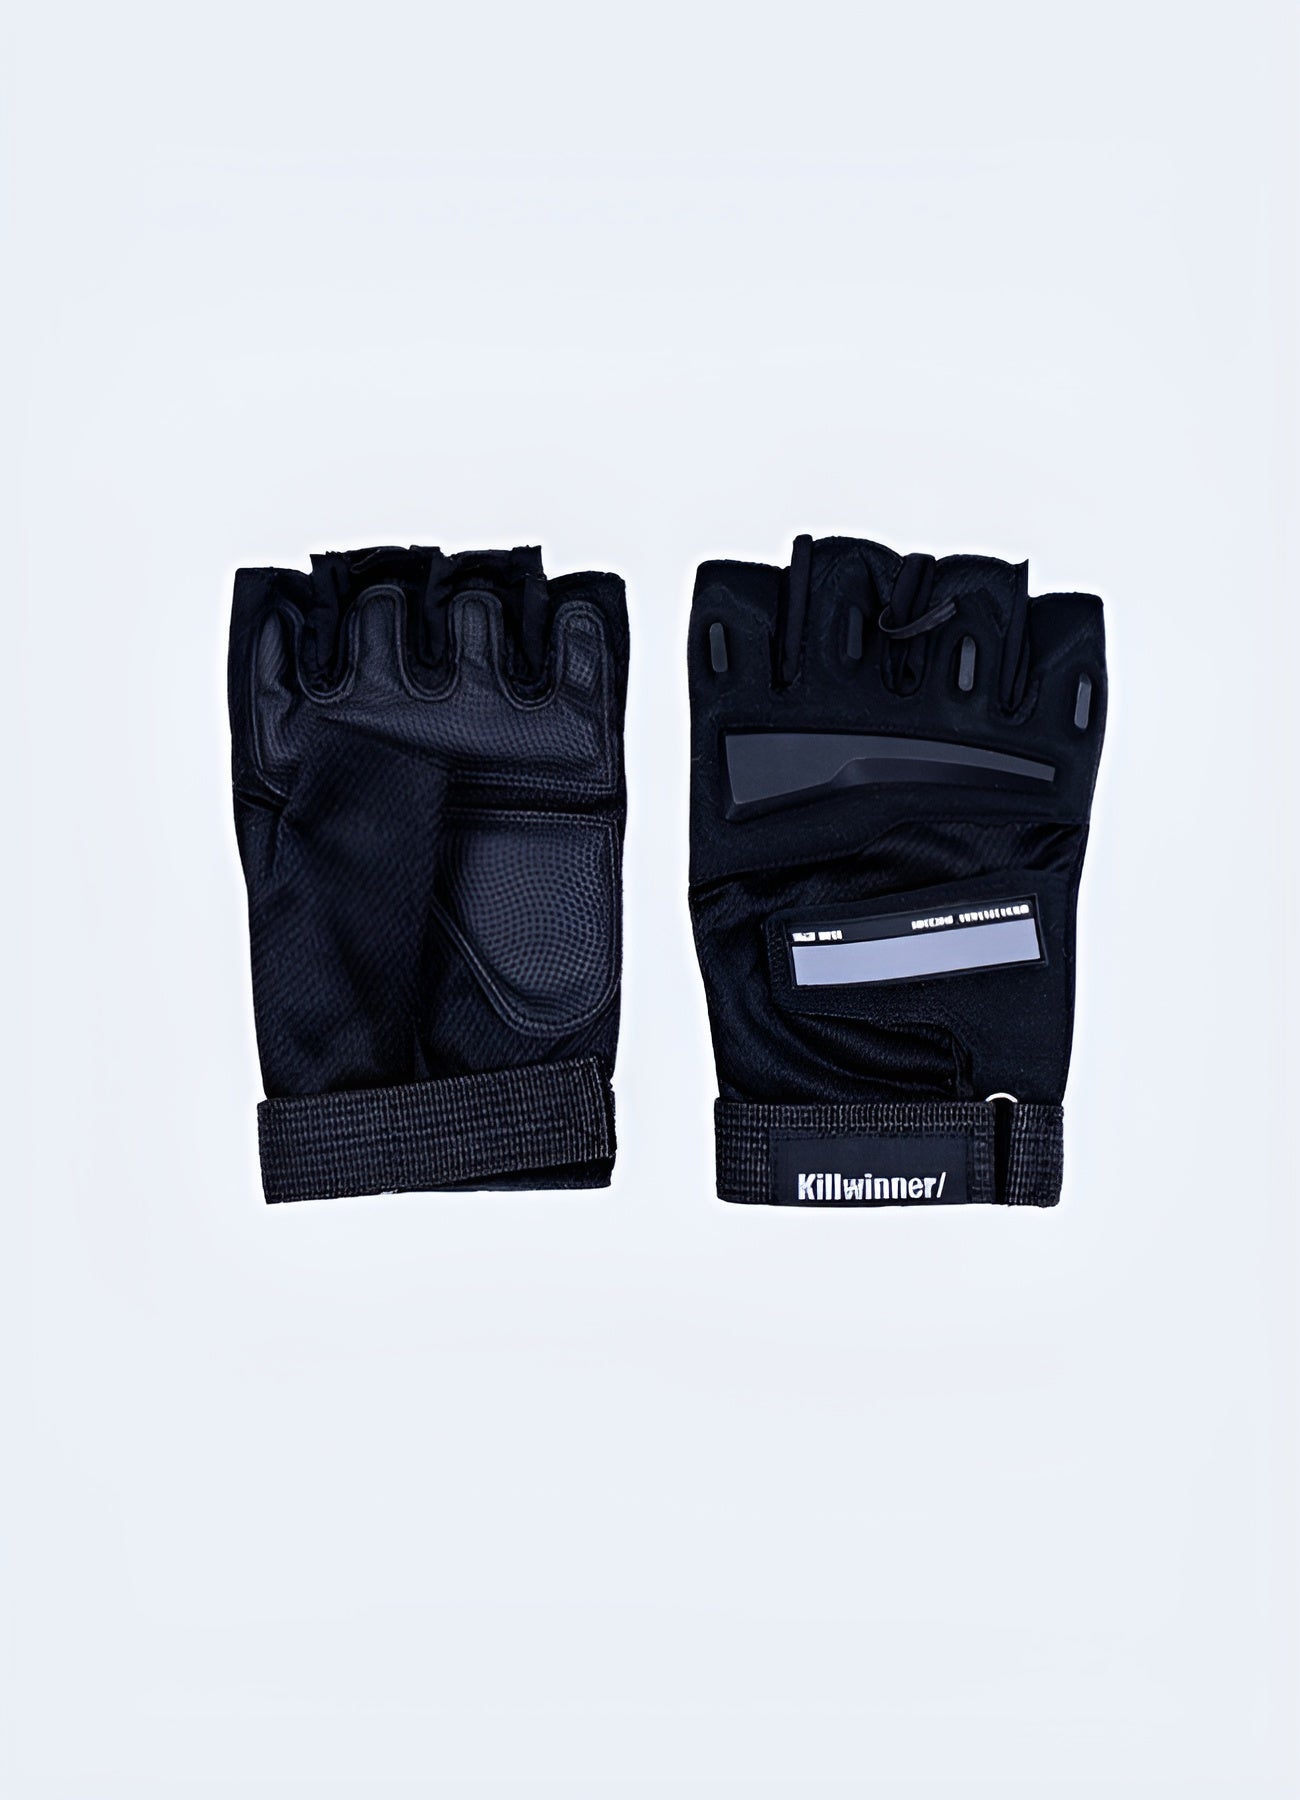 Fingerless street style gloves streetwear gloves both side black view.